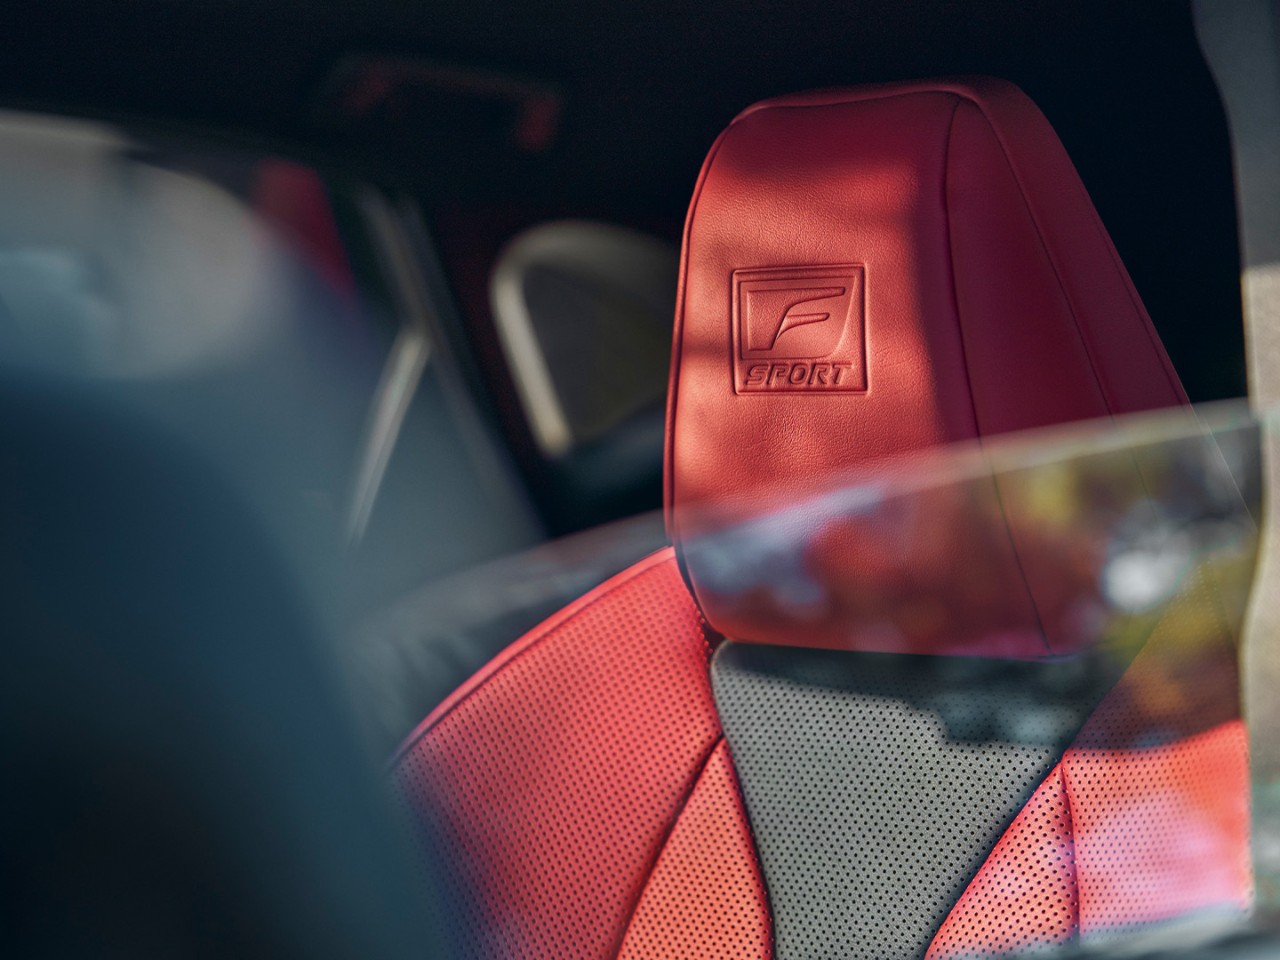 Lexus F Sport headrest detailing